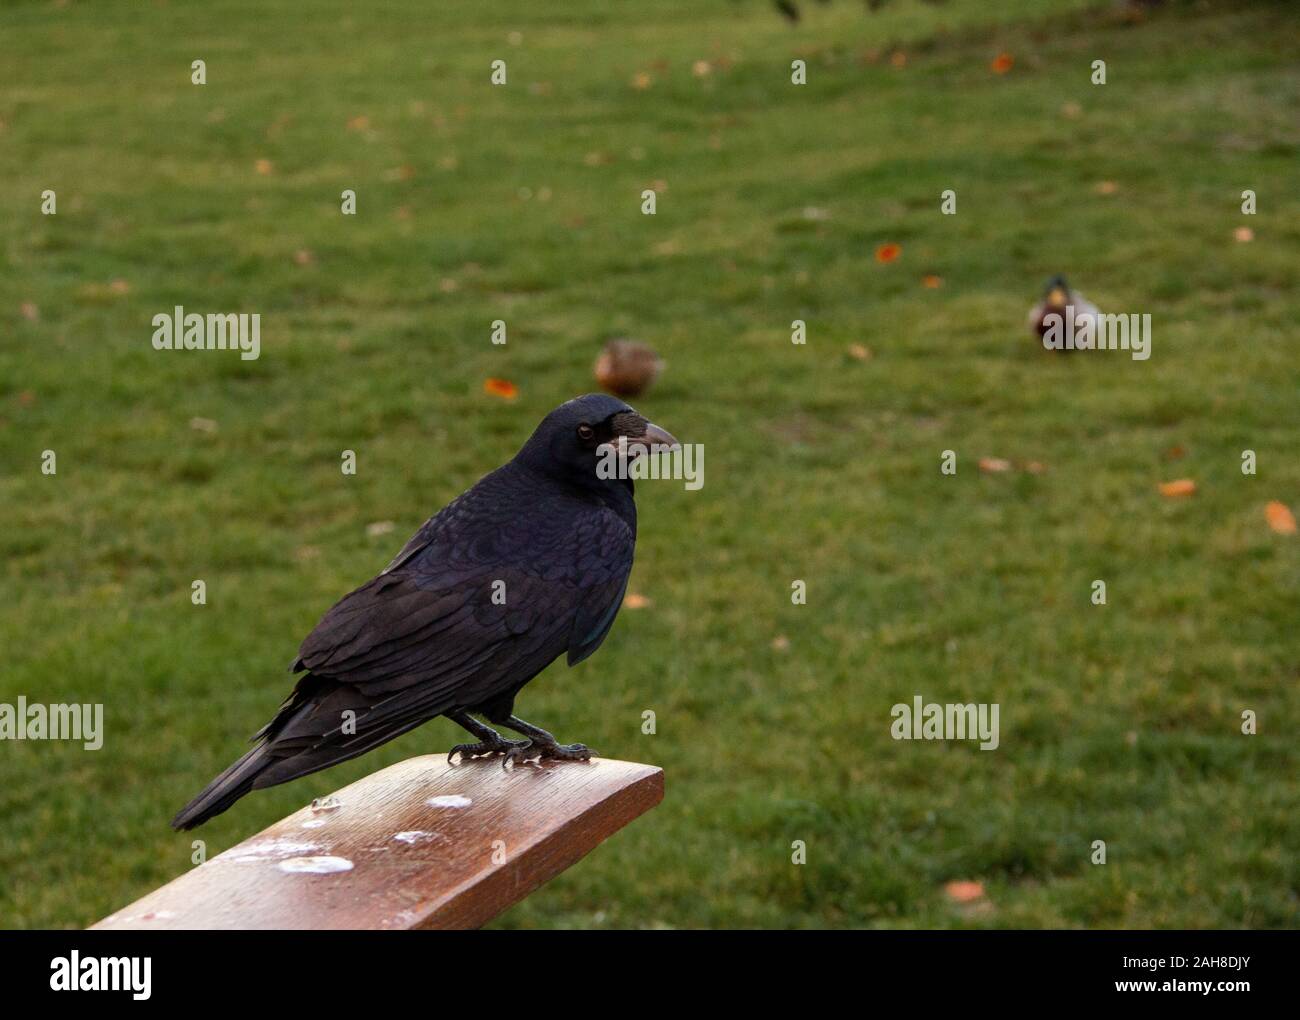 Un rook (Corvus frugilegus) bird seduto su un pezzo di legno Foto Stock